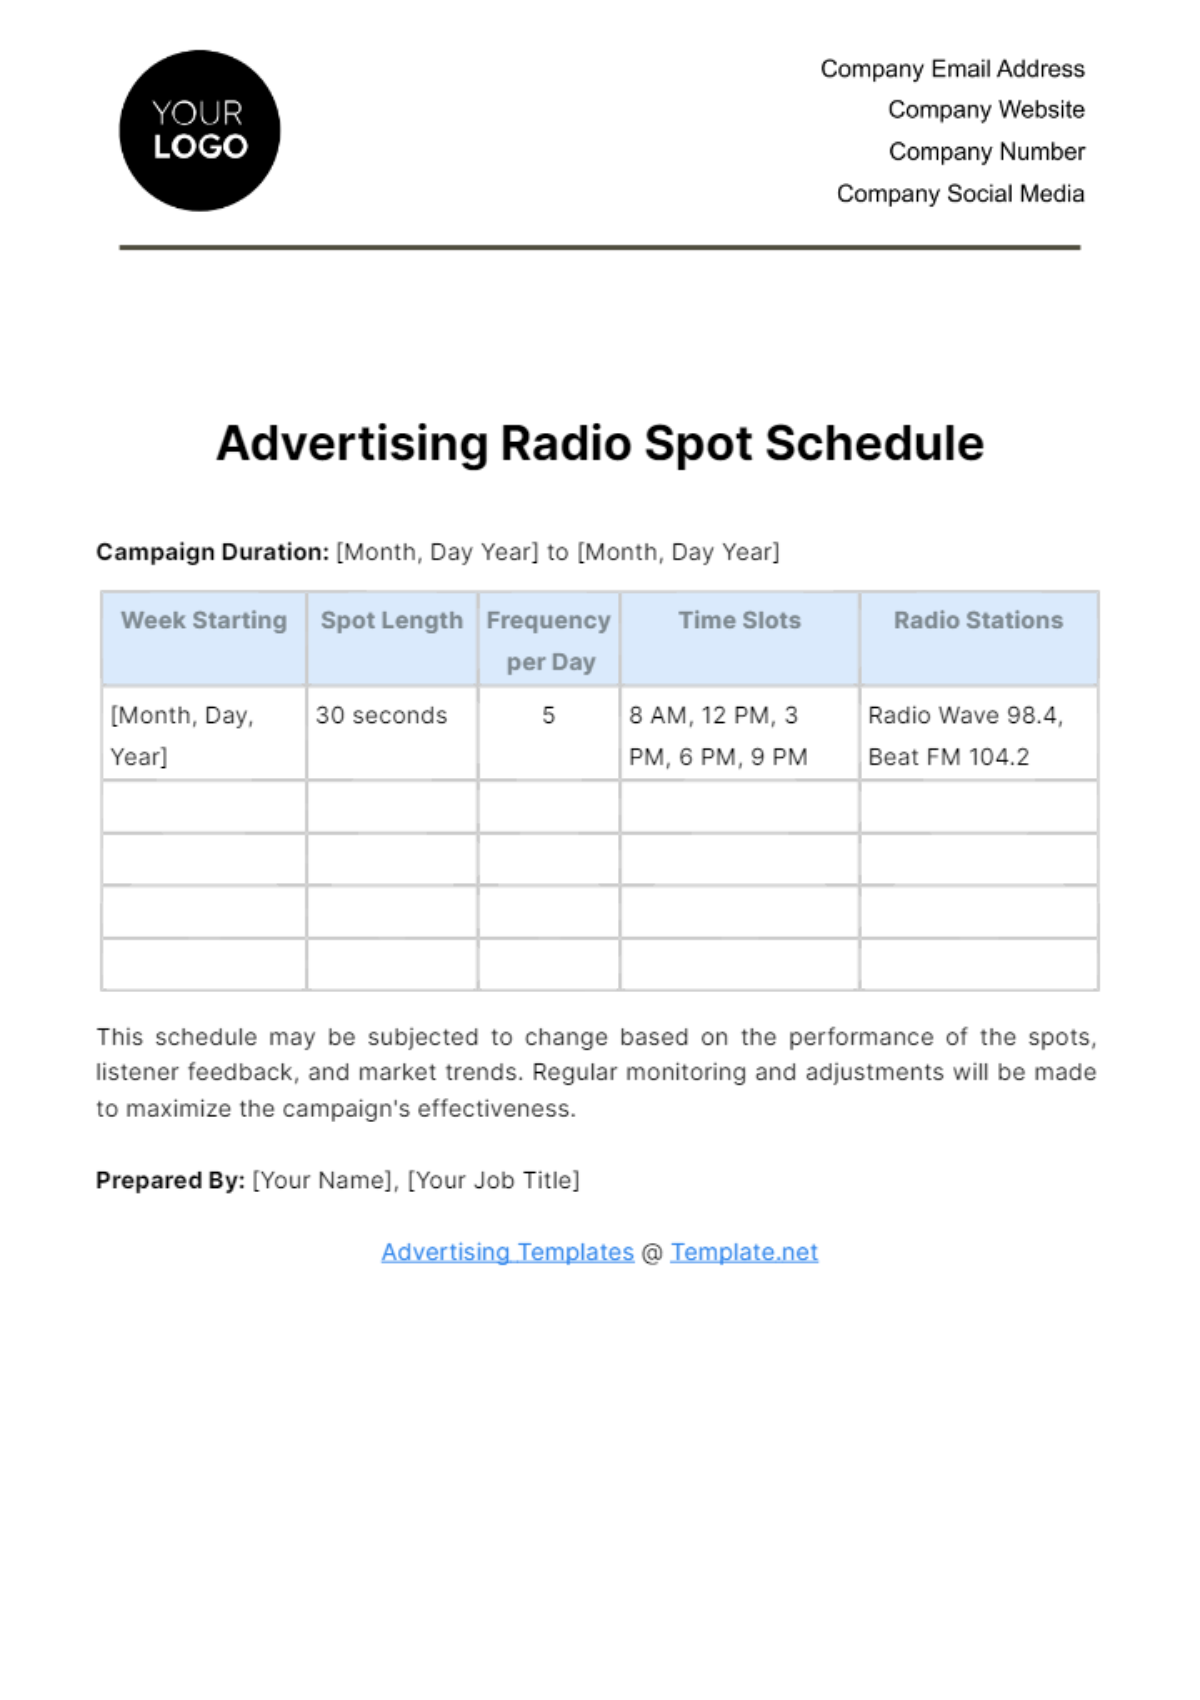 Free Advertising Radio Spot Schedule Template